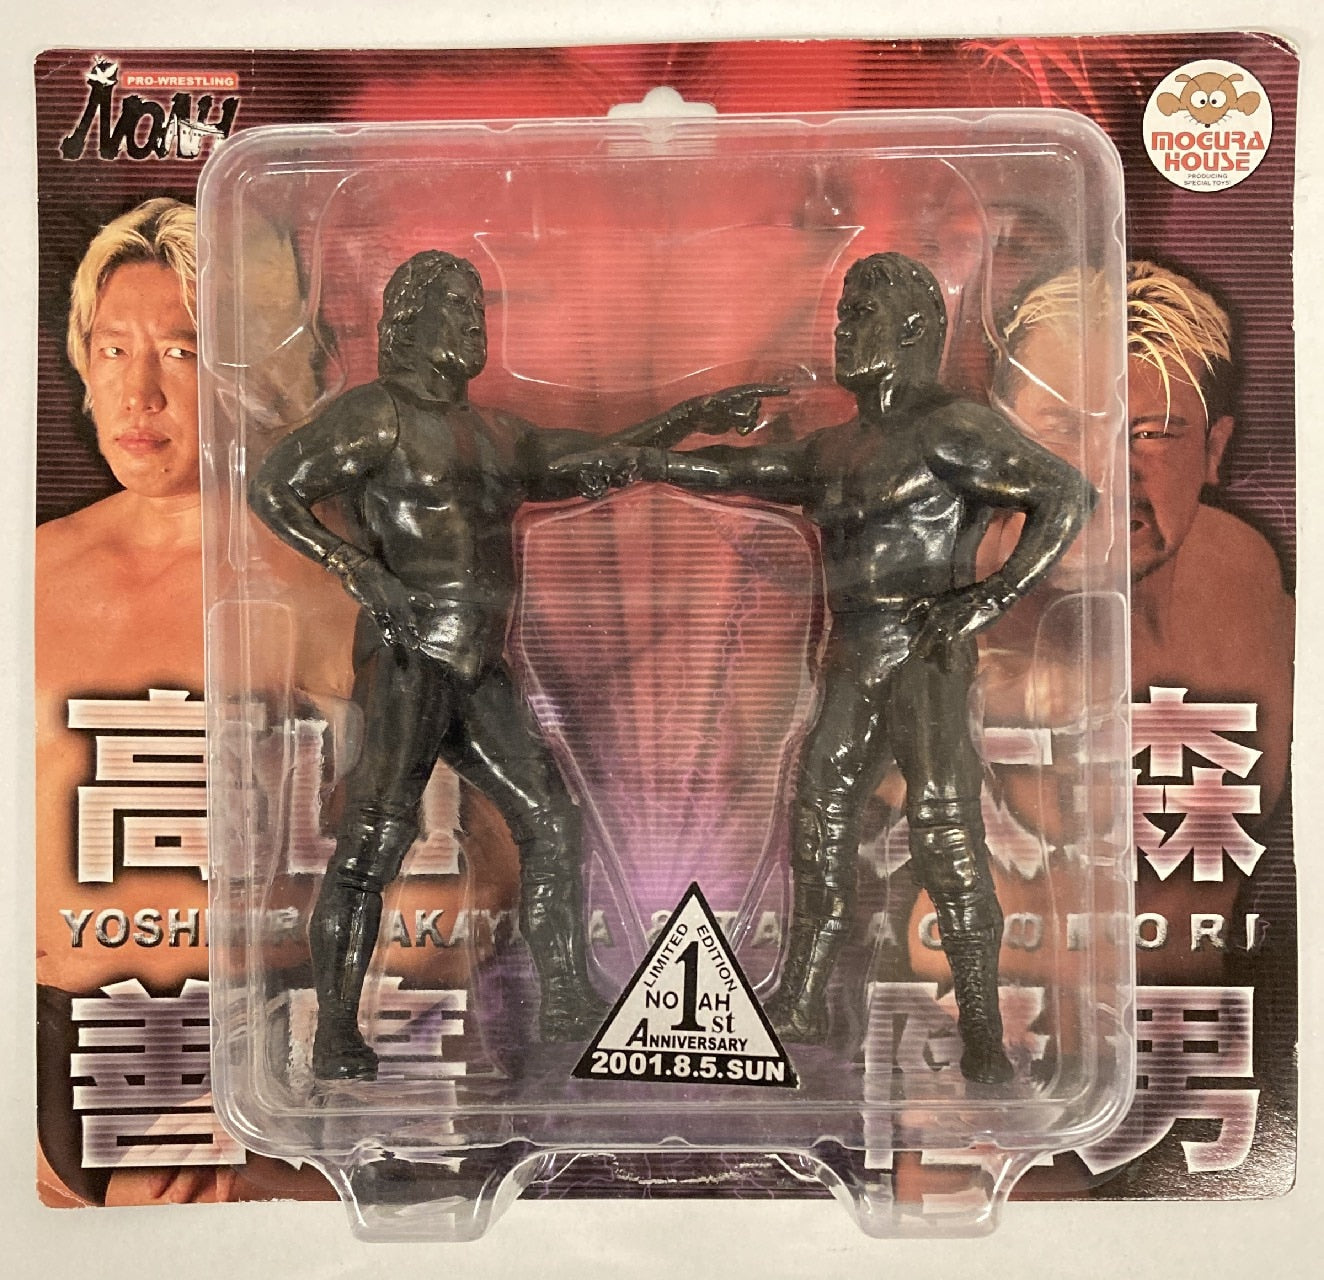 Pro-Wrestling NOAH Mogura House Multipack: Yoshihiro Takayama & Takao Omori [Bronze Editions]